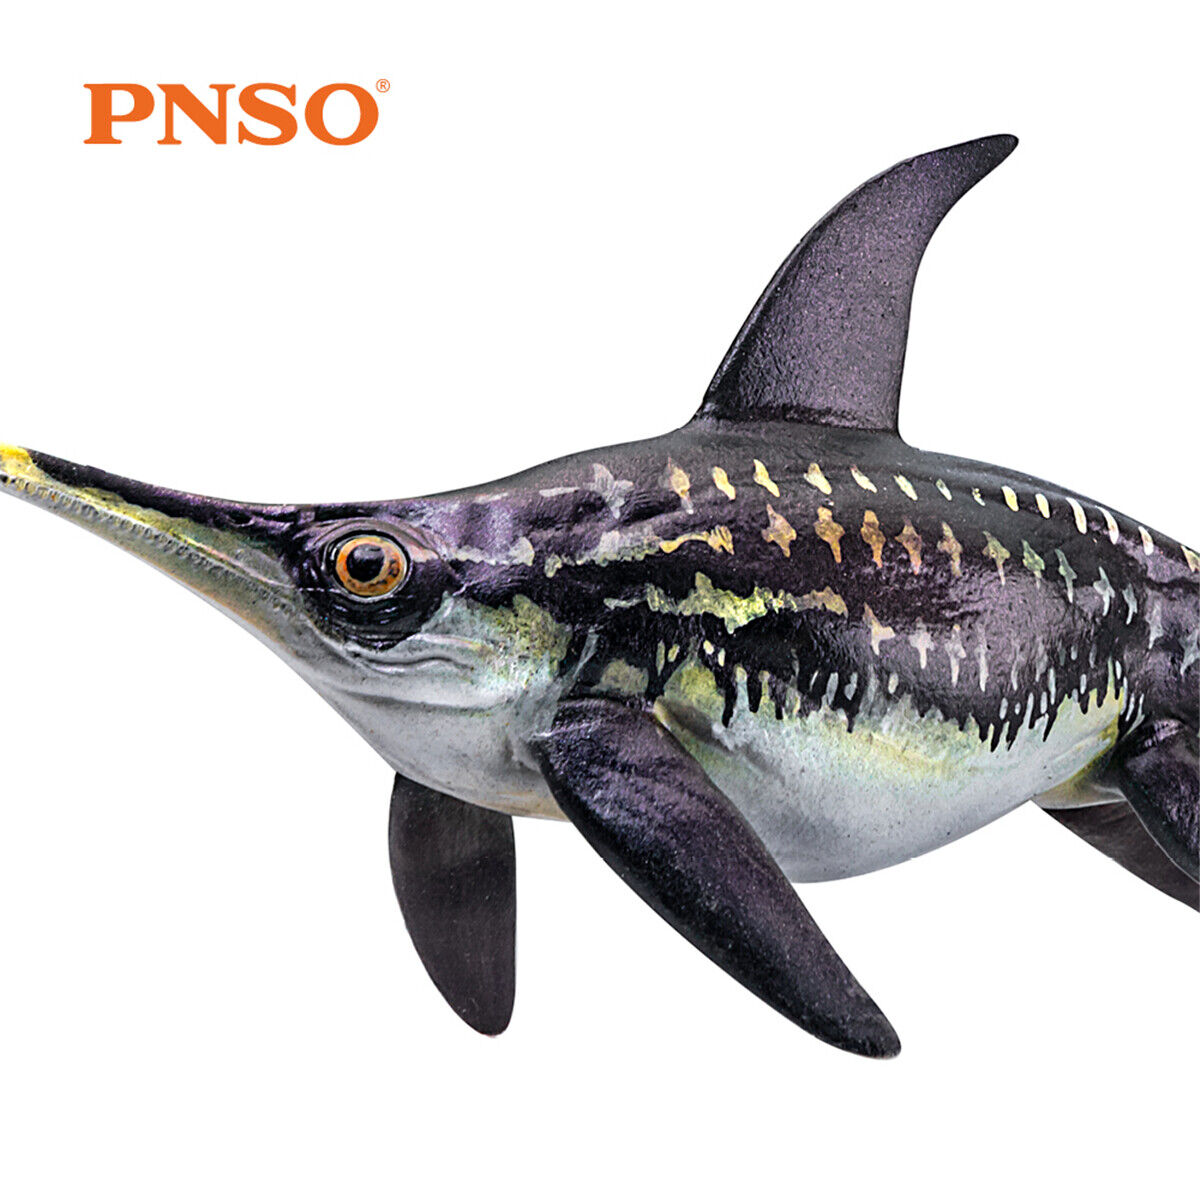 PNSO Eurhinosaurus Ichthyosaur Dinosaur Model Ocean Animal Collection Decor Gift